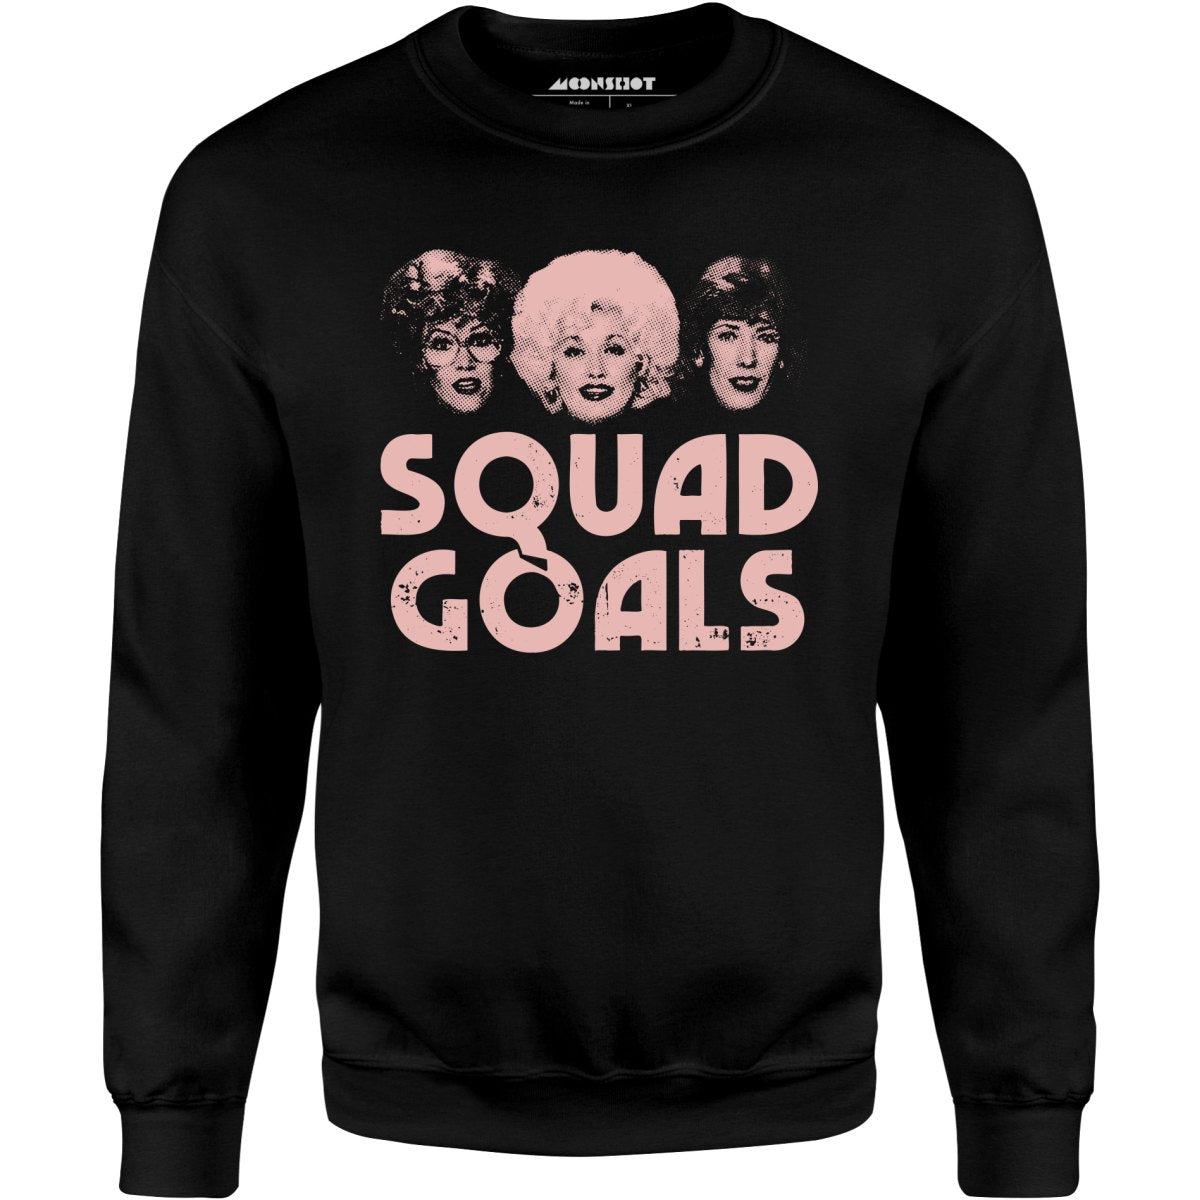 Squad Goals 9 to 5 - Unisex Sweatshirt